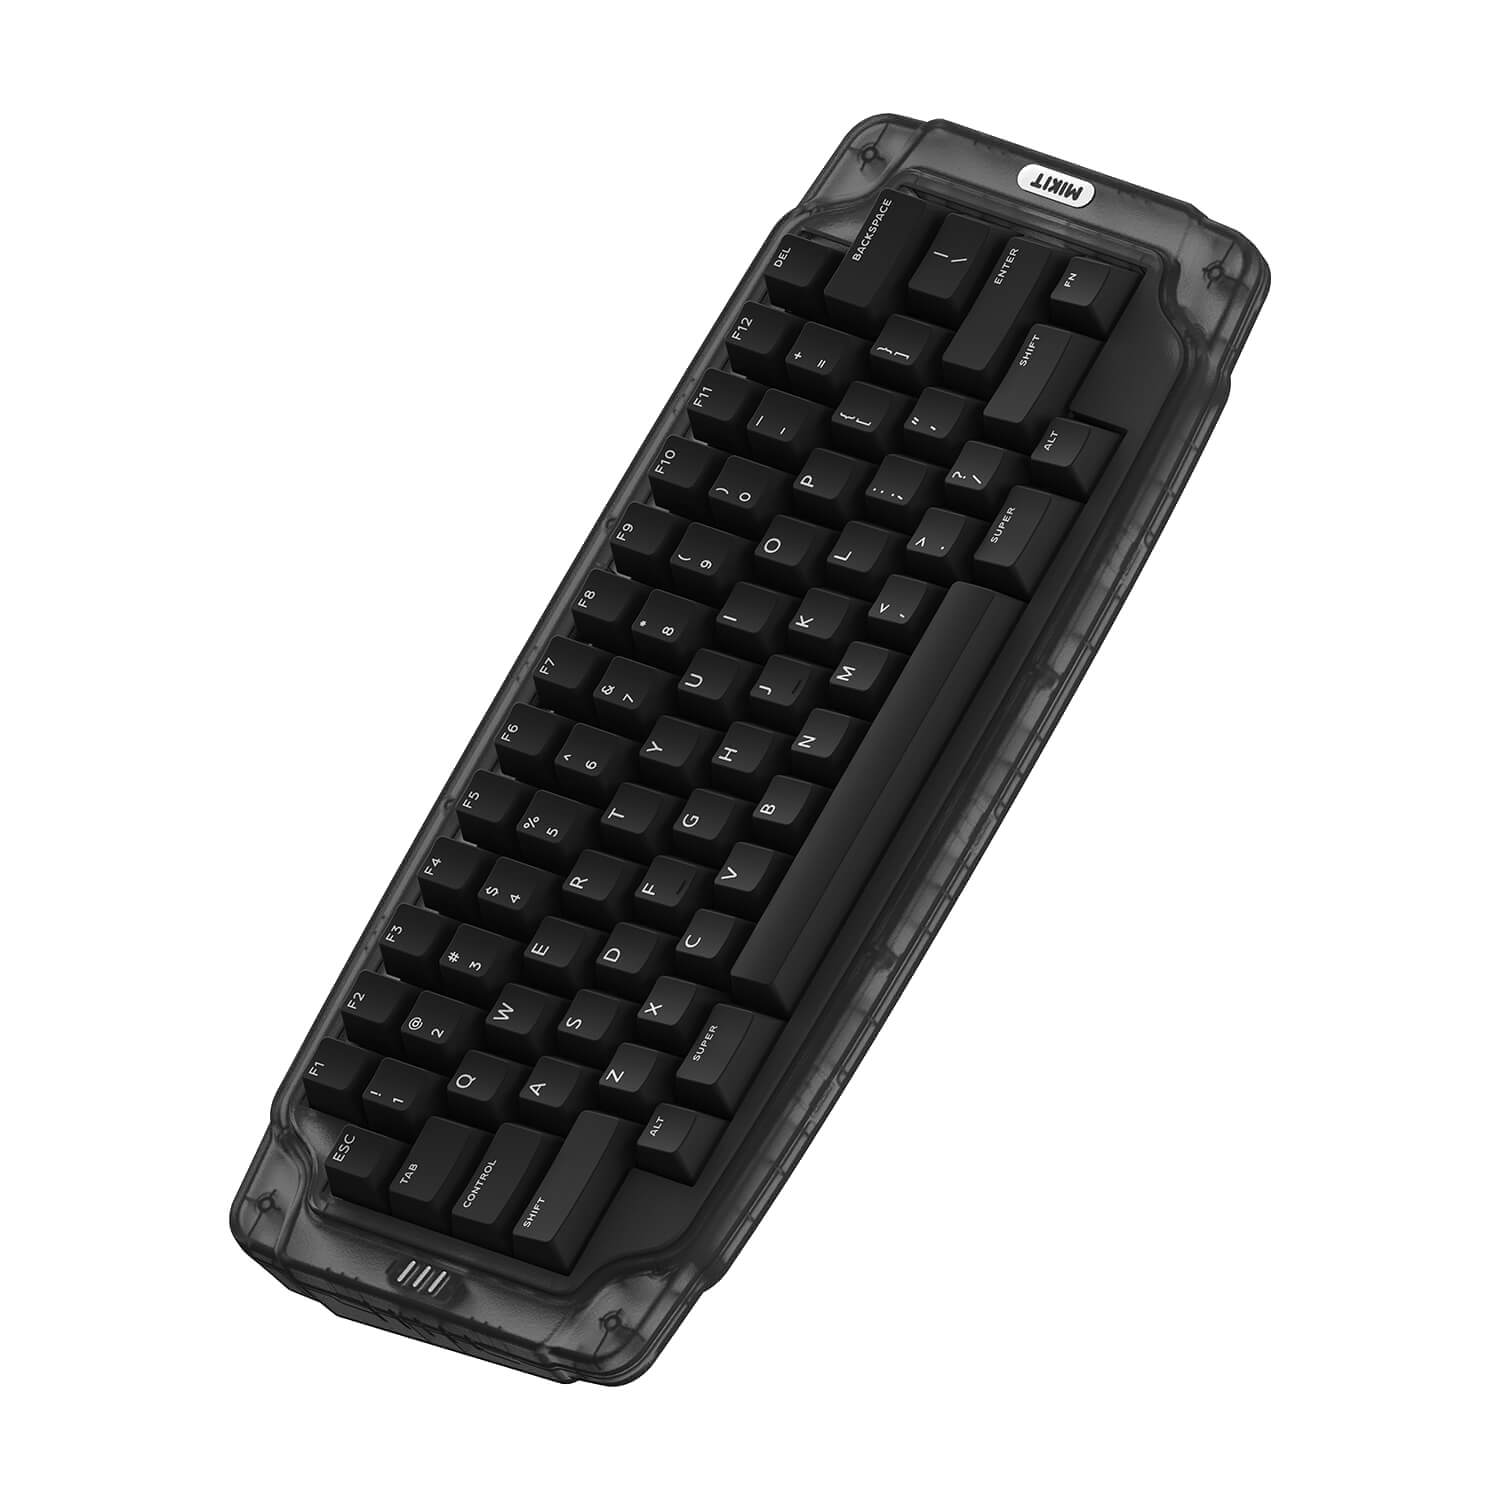 MK72 Obsidian Wireless RGB Keyboard